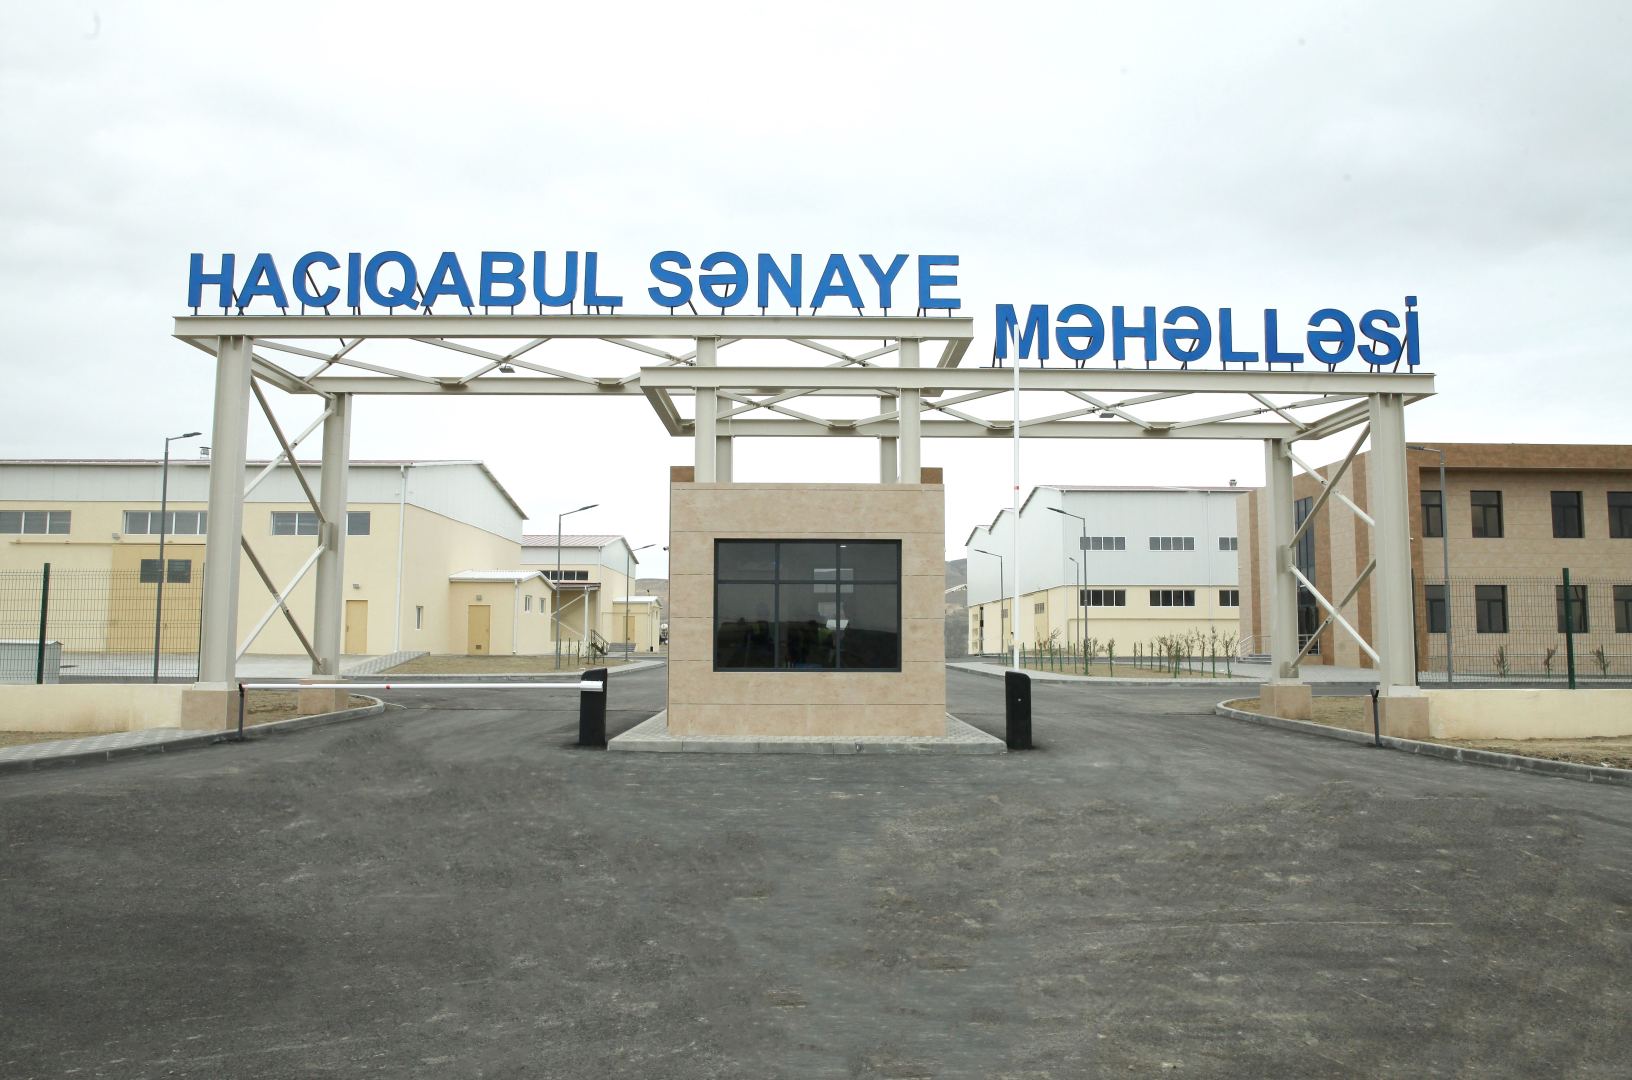 Production in Azerbaijan's Hajigabul industrial quarter grows significantly